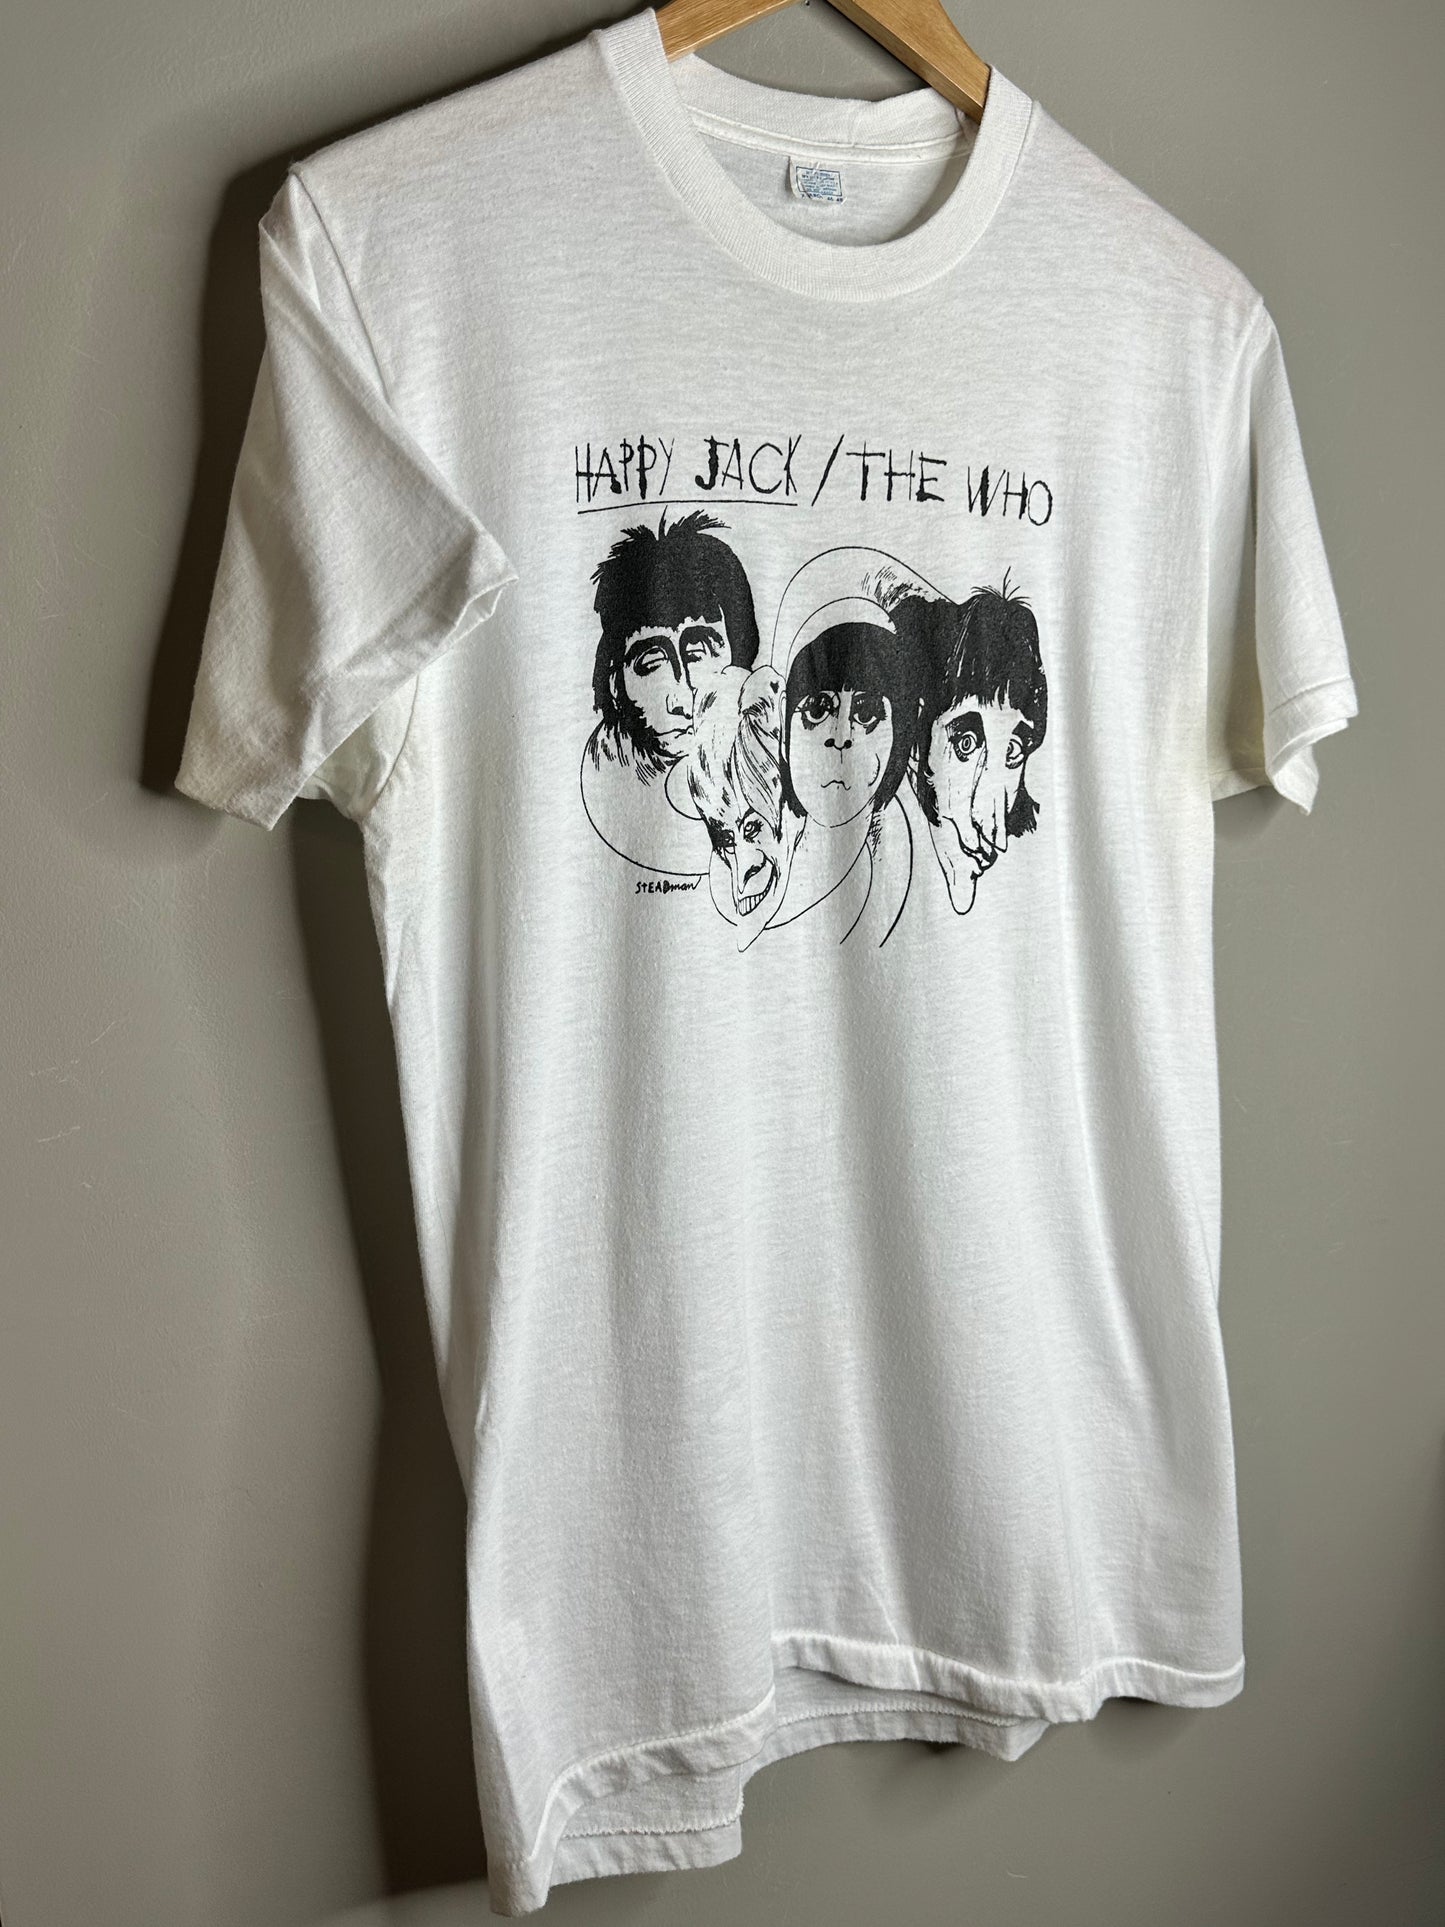 Vintage 1970 The Who Happy Jack Ralph Steadman Art t-shirt L